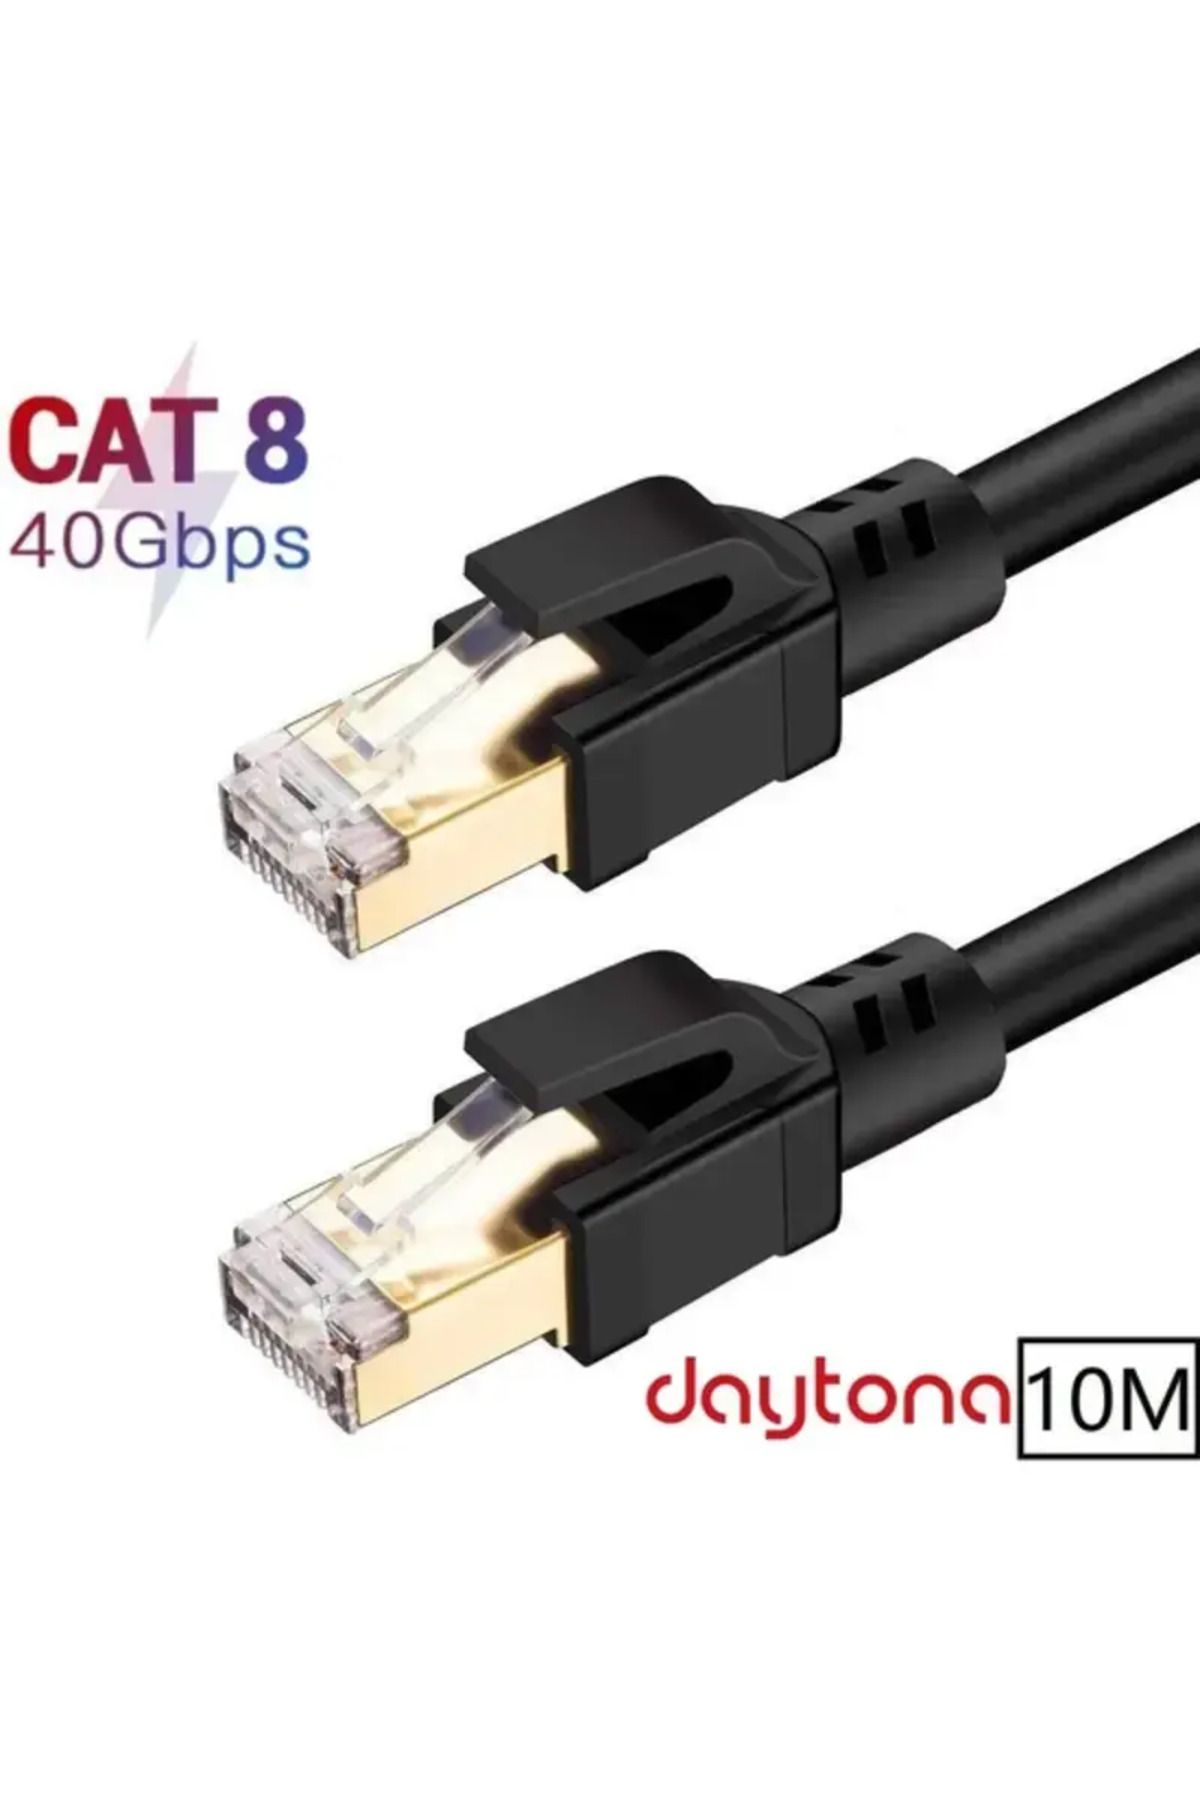 Daytona A5217 Gıgabıt Cat8 40gbps S/ftp 2000mhz Altın Uçlu Yüksek Hızlı Internet Kablosu (10 METRE)